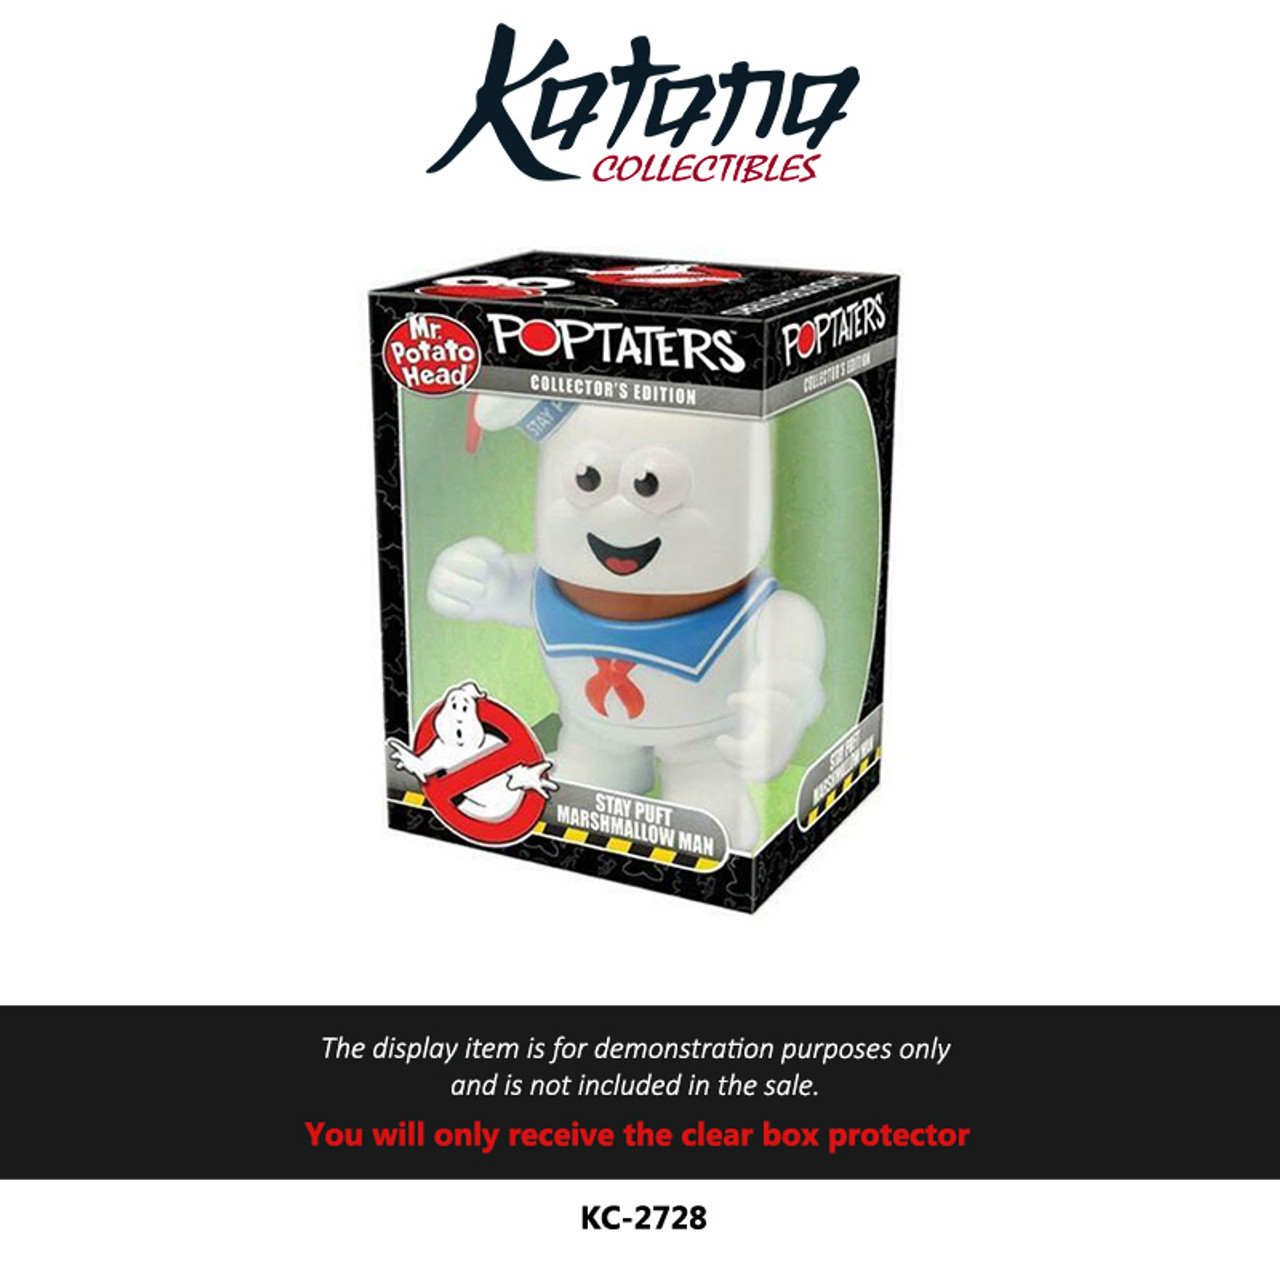 Katana Collectibles Protector For Mr. Potato Head Collectors Edition Ghostbusters